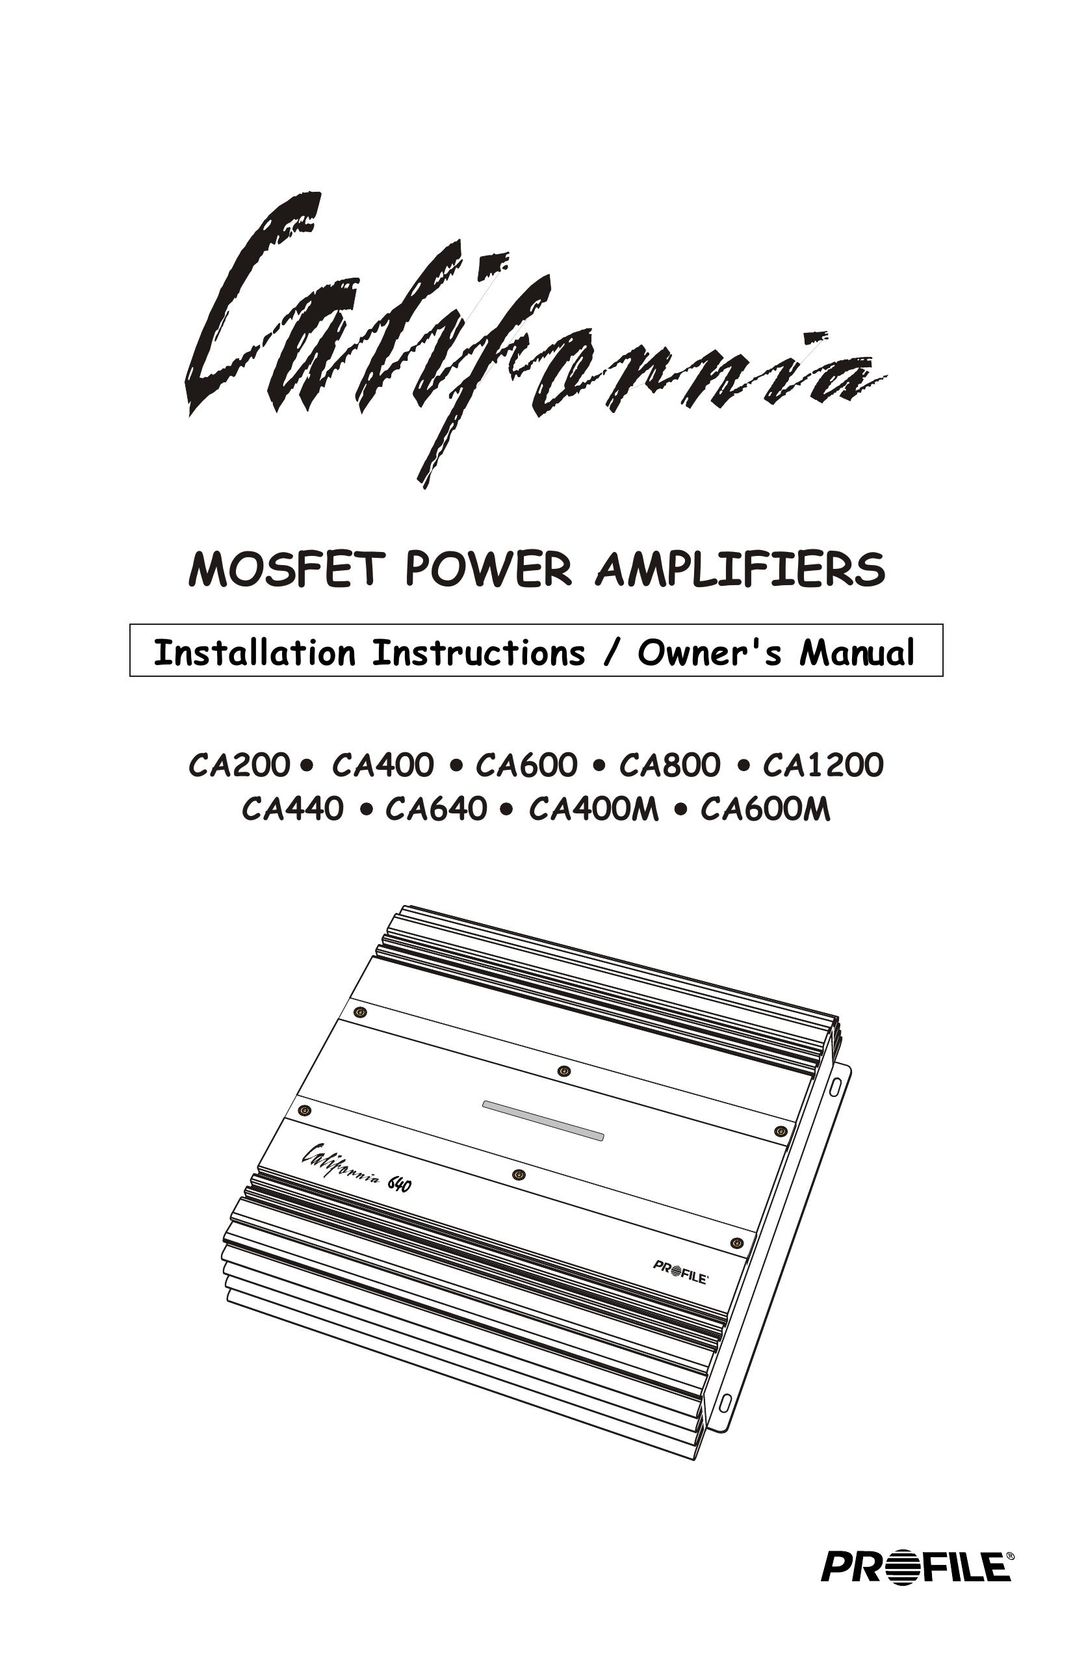 Profile CA600 Stereo Amplifier User Manual